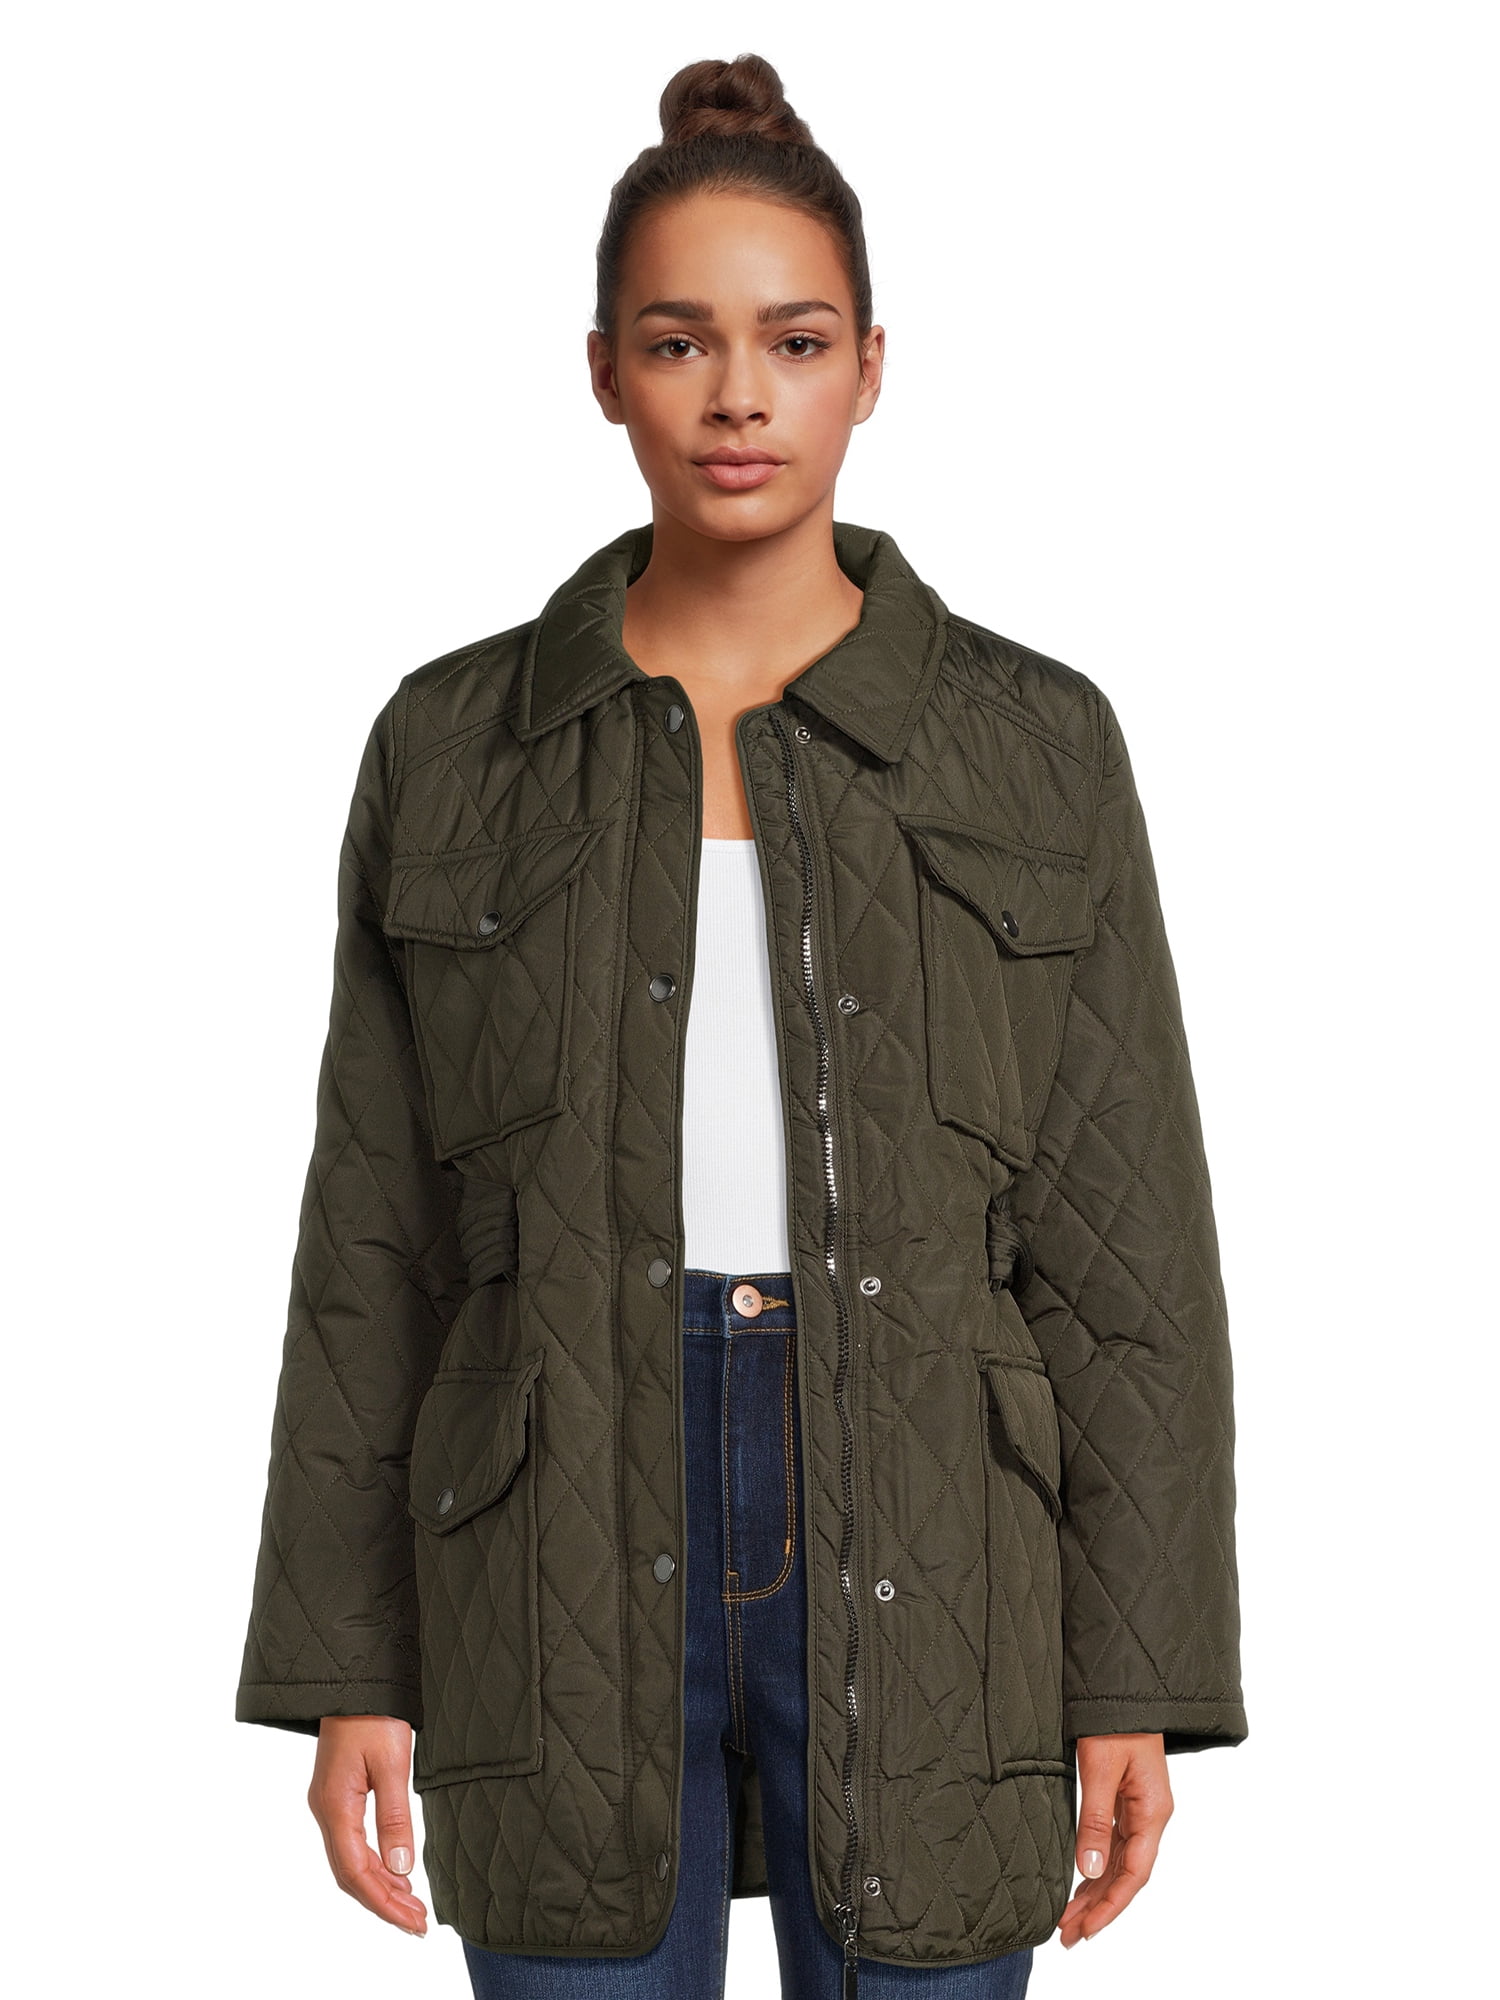 Urban Republic Women’s Thin Quilted Barn Jacket with Belt - Walmart.com